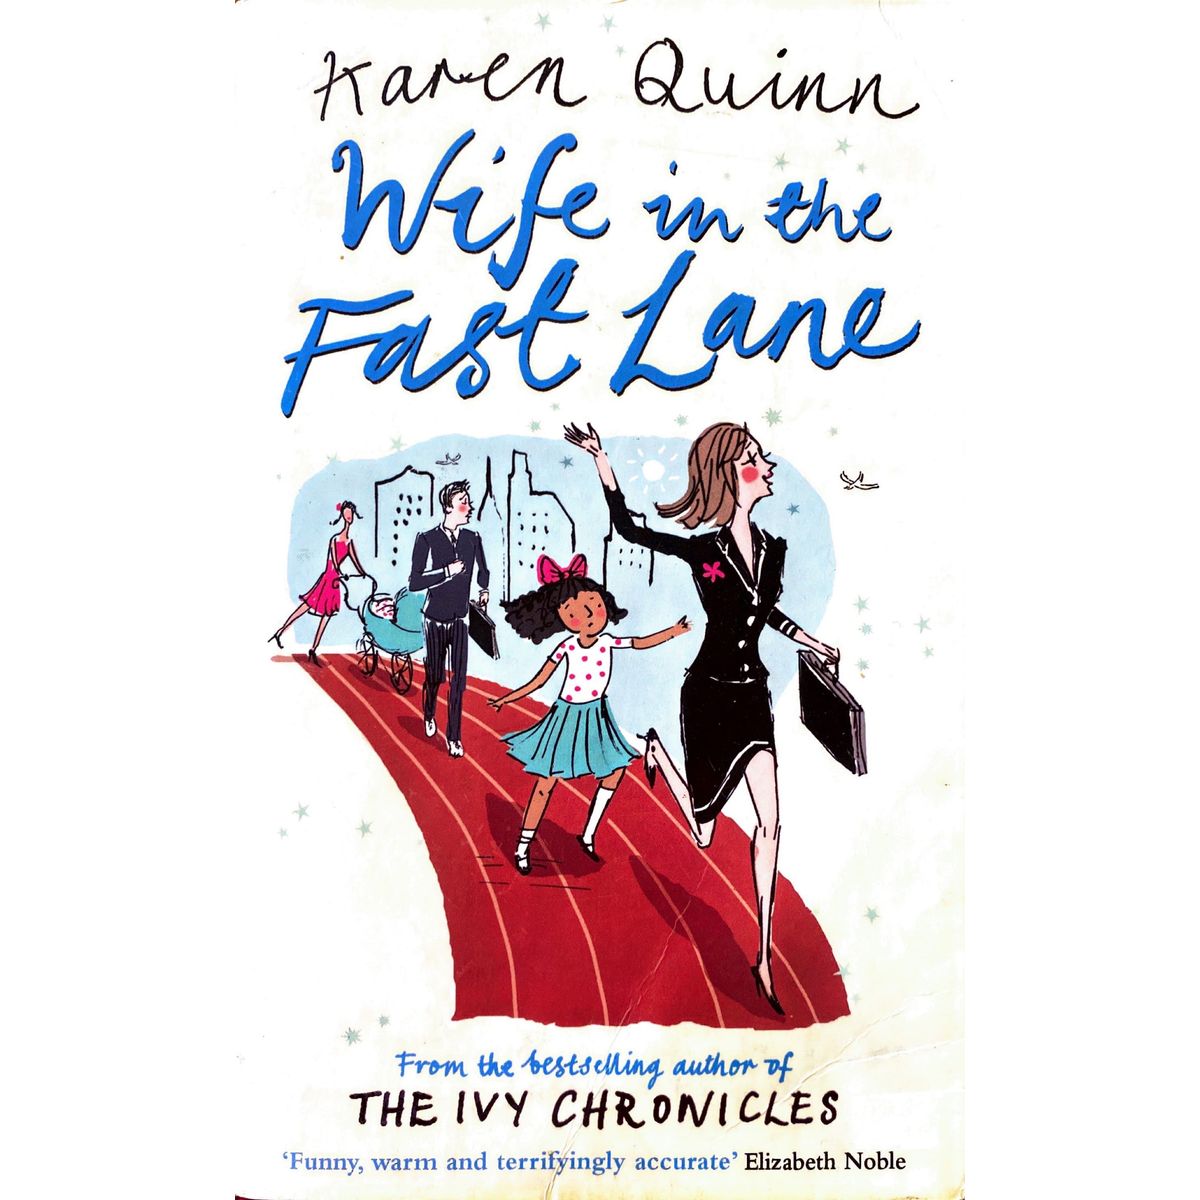 ISBN: 9780743492171 / 074349217X - Wife in the Fast Lane by Karen Quinn [2006]